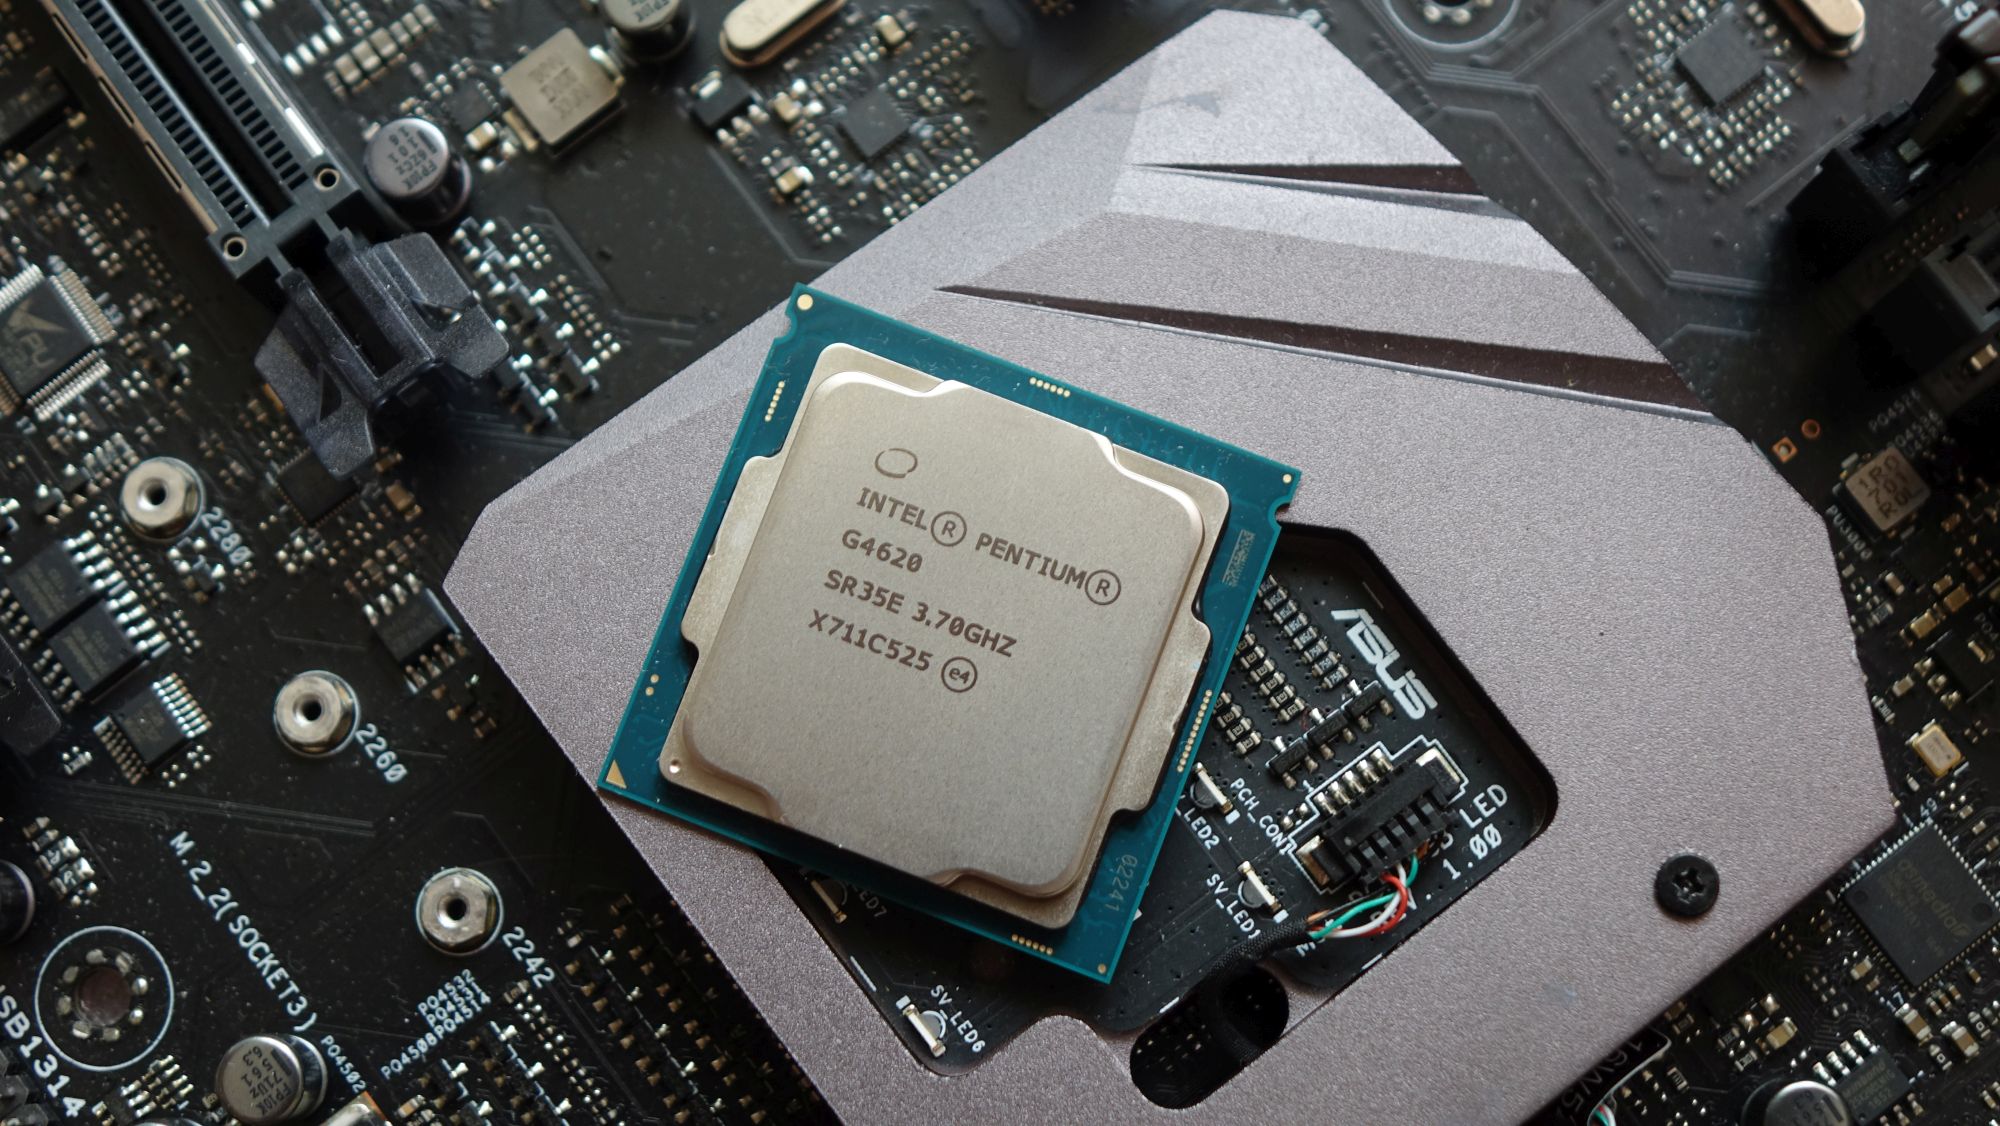 Intel r 630